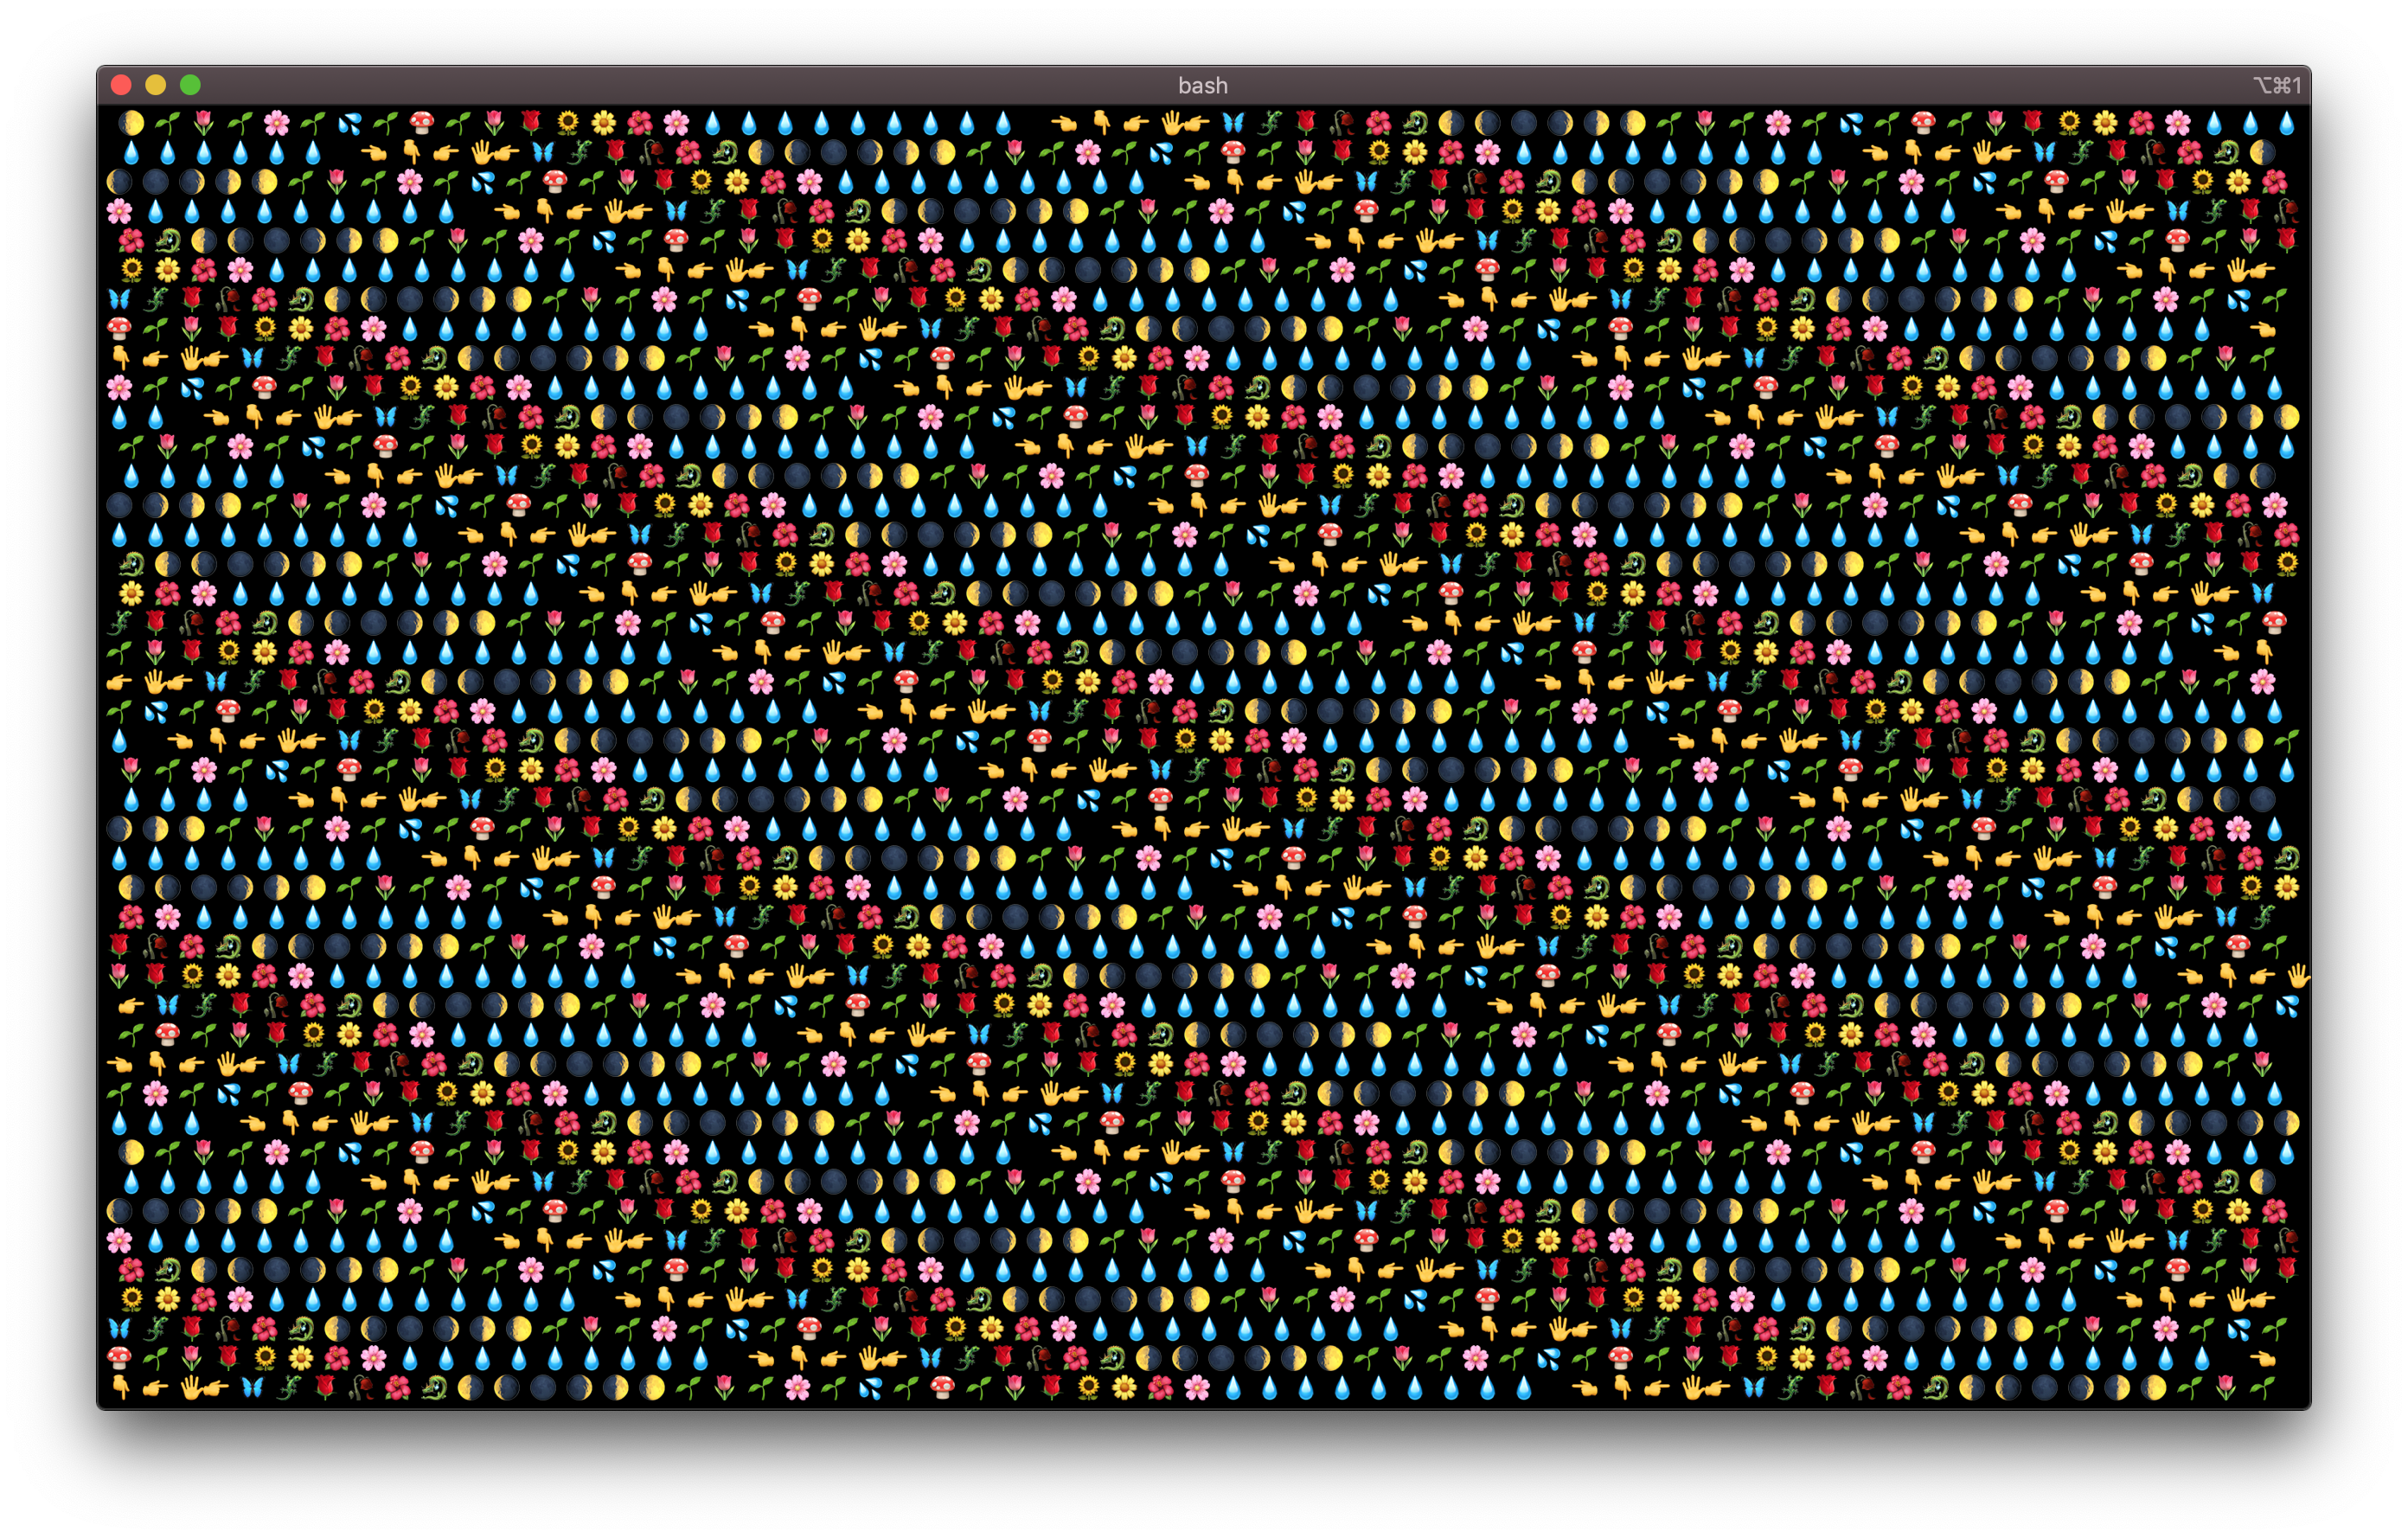 computer terminal with field of emoji symbols creating diagonal patterns